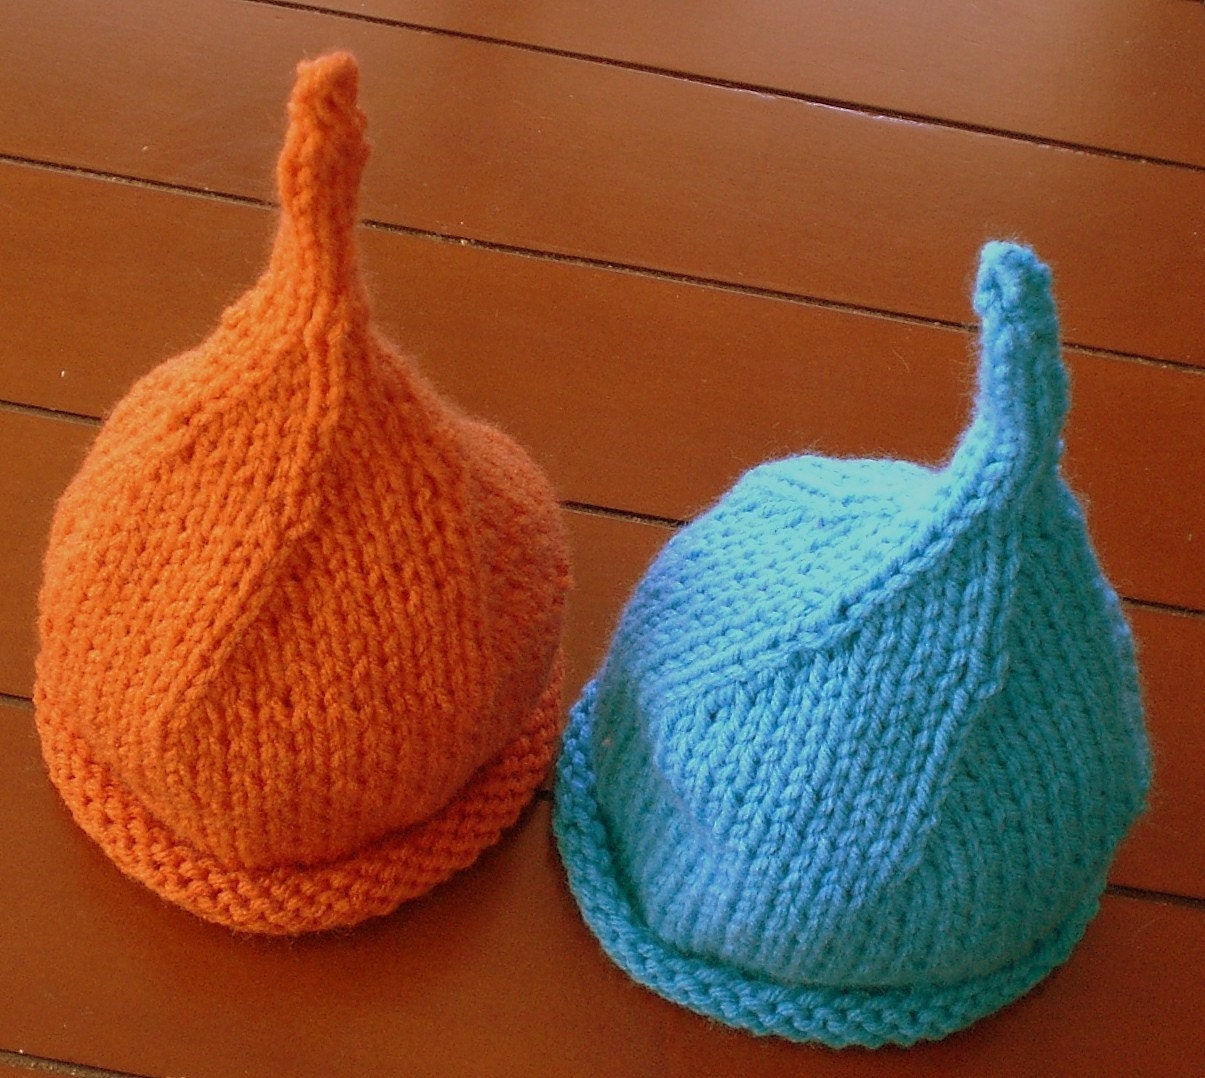 WOODLAND ELF Newborn Baby Hat - Great Photo Prop - Garden Pixie Fairy Tuque - Pick your color - boy girl unigender - Custom Knit to order  - ORIGINAL DESIGNER